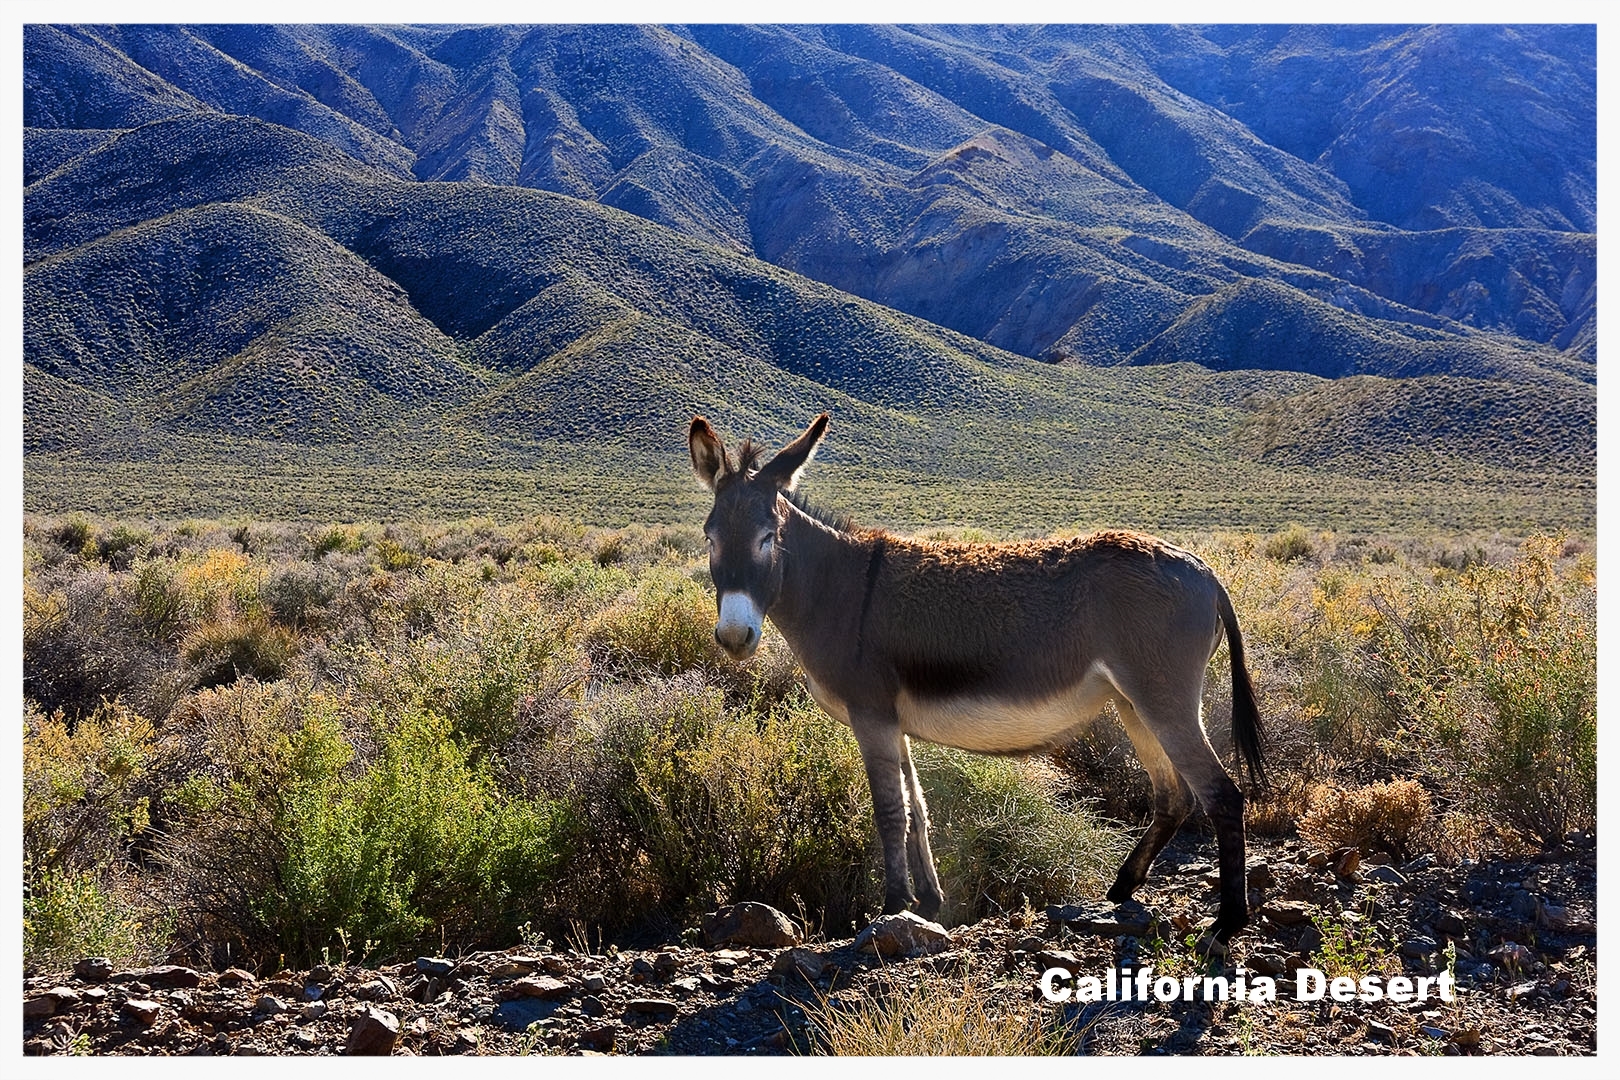     Click to view California Desert Portfolio    